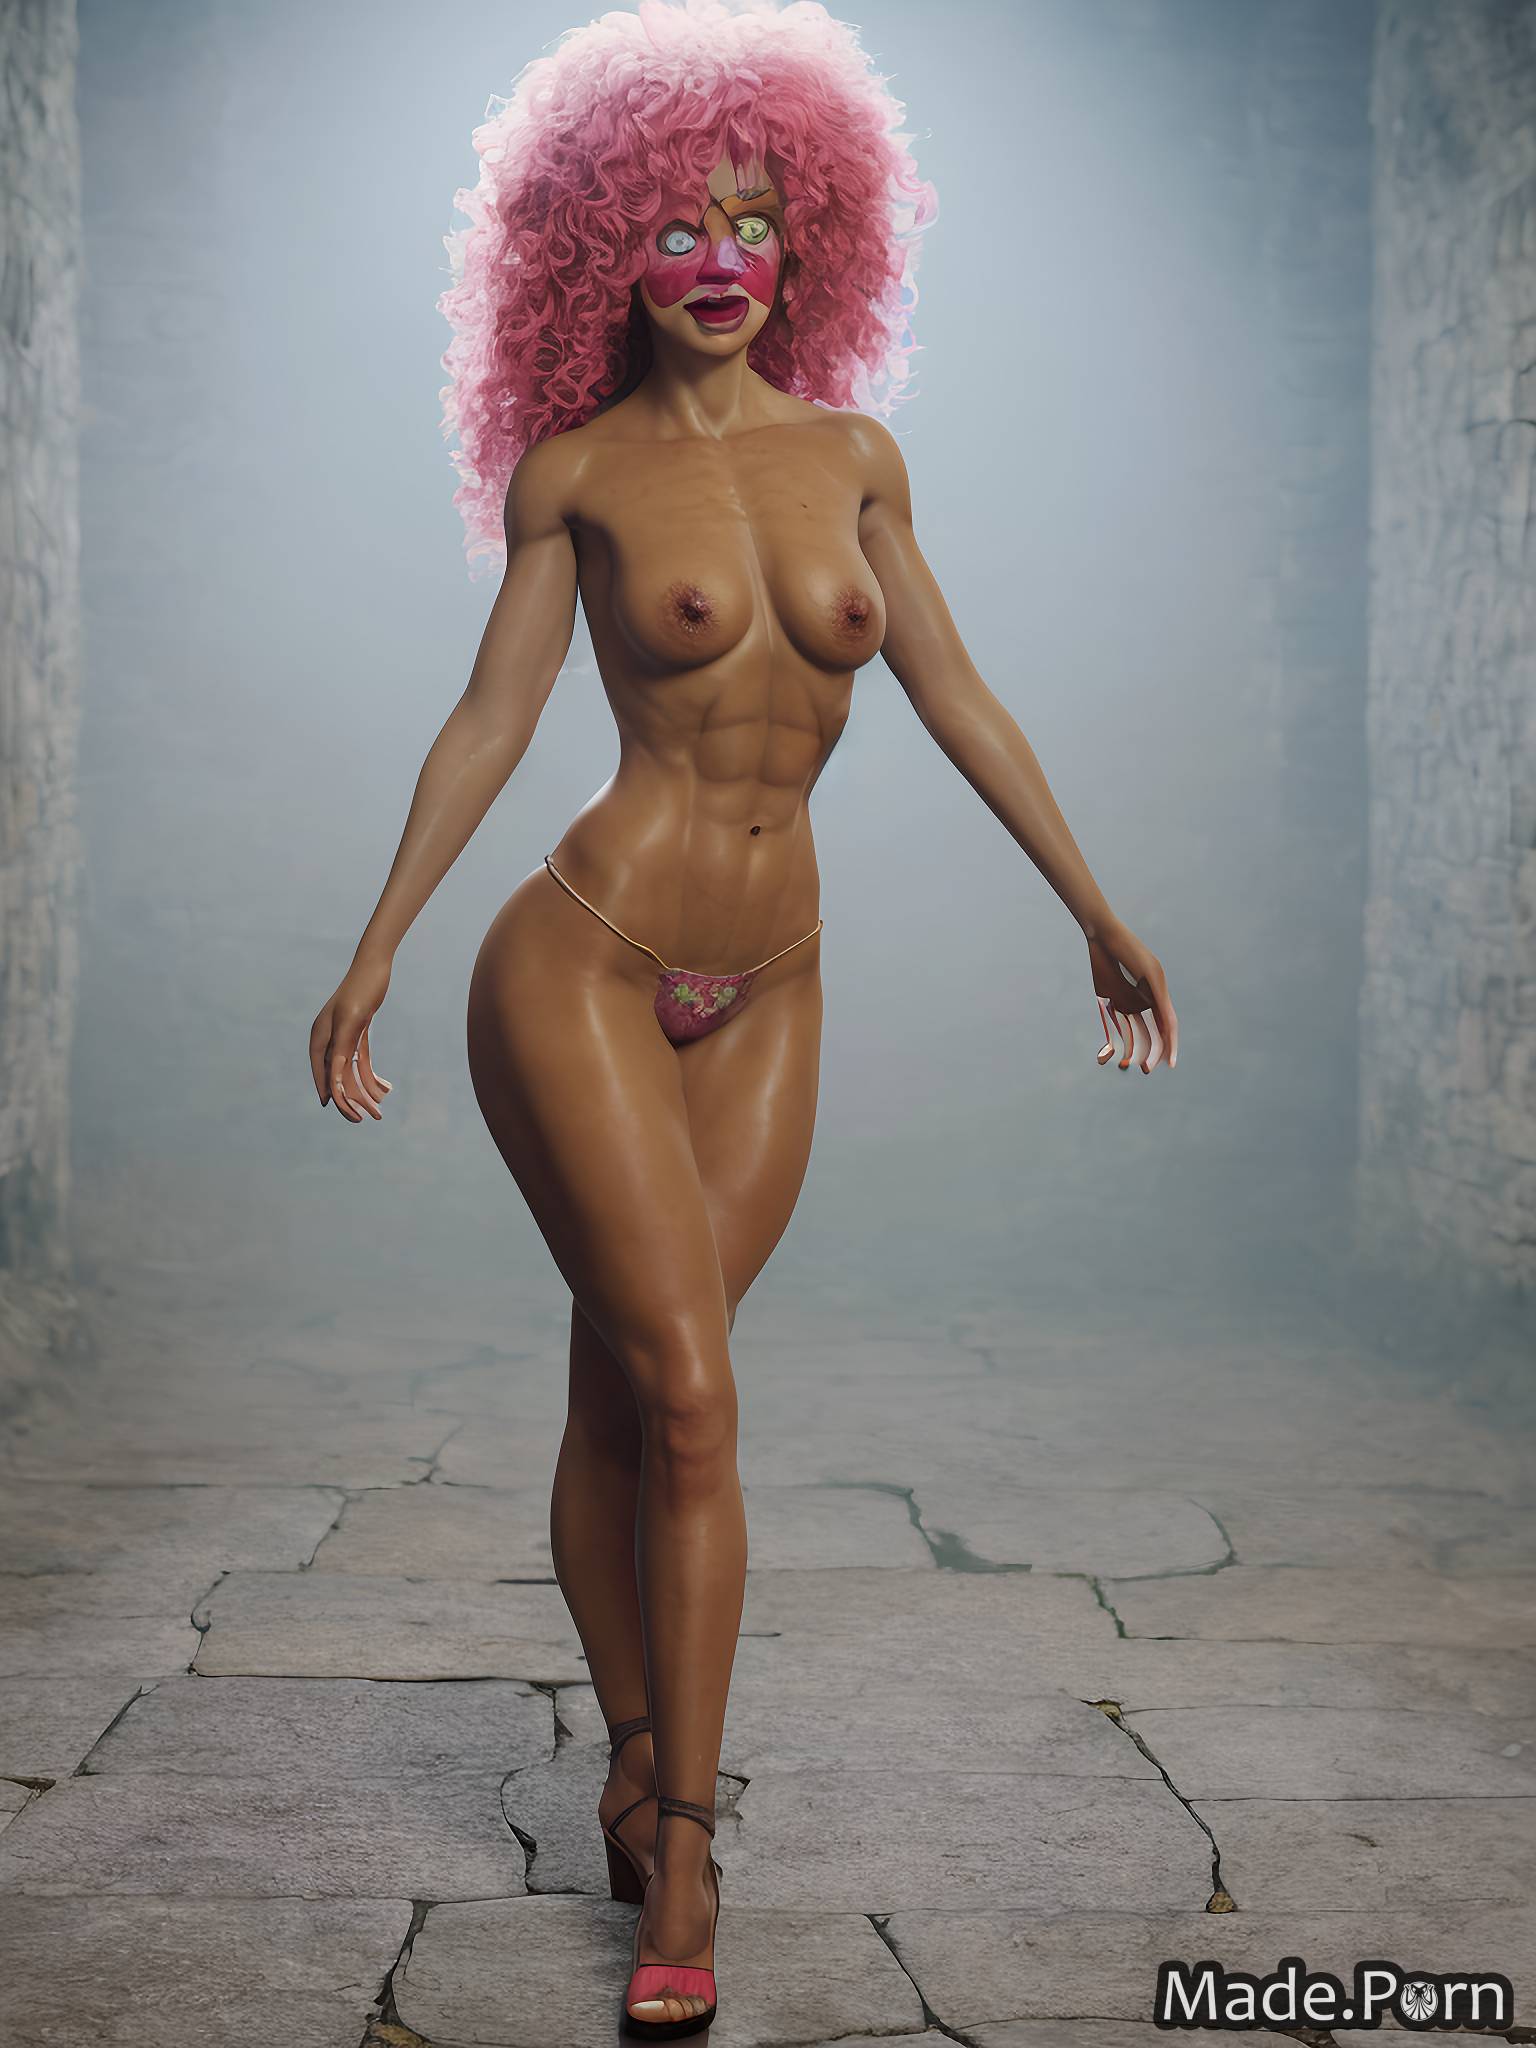 nude clown dungeon big hips high heels muscular woman